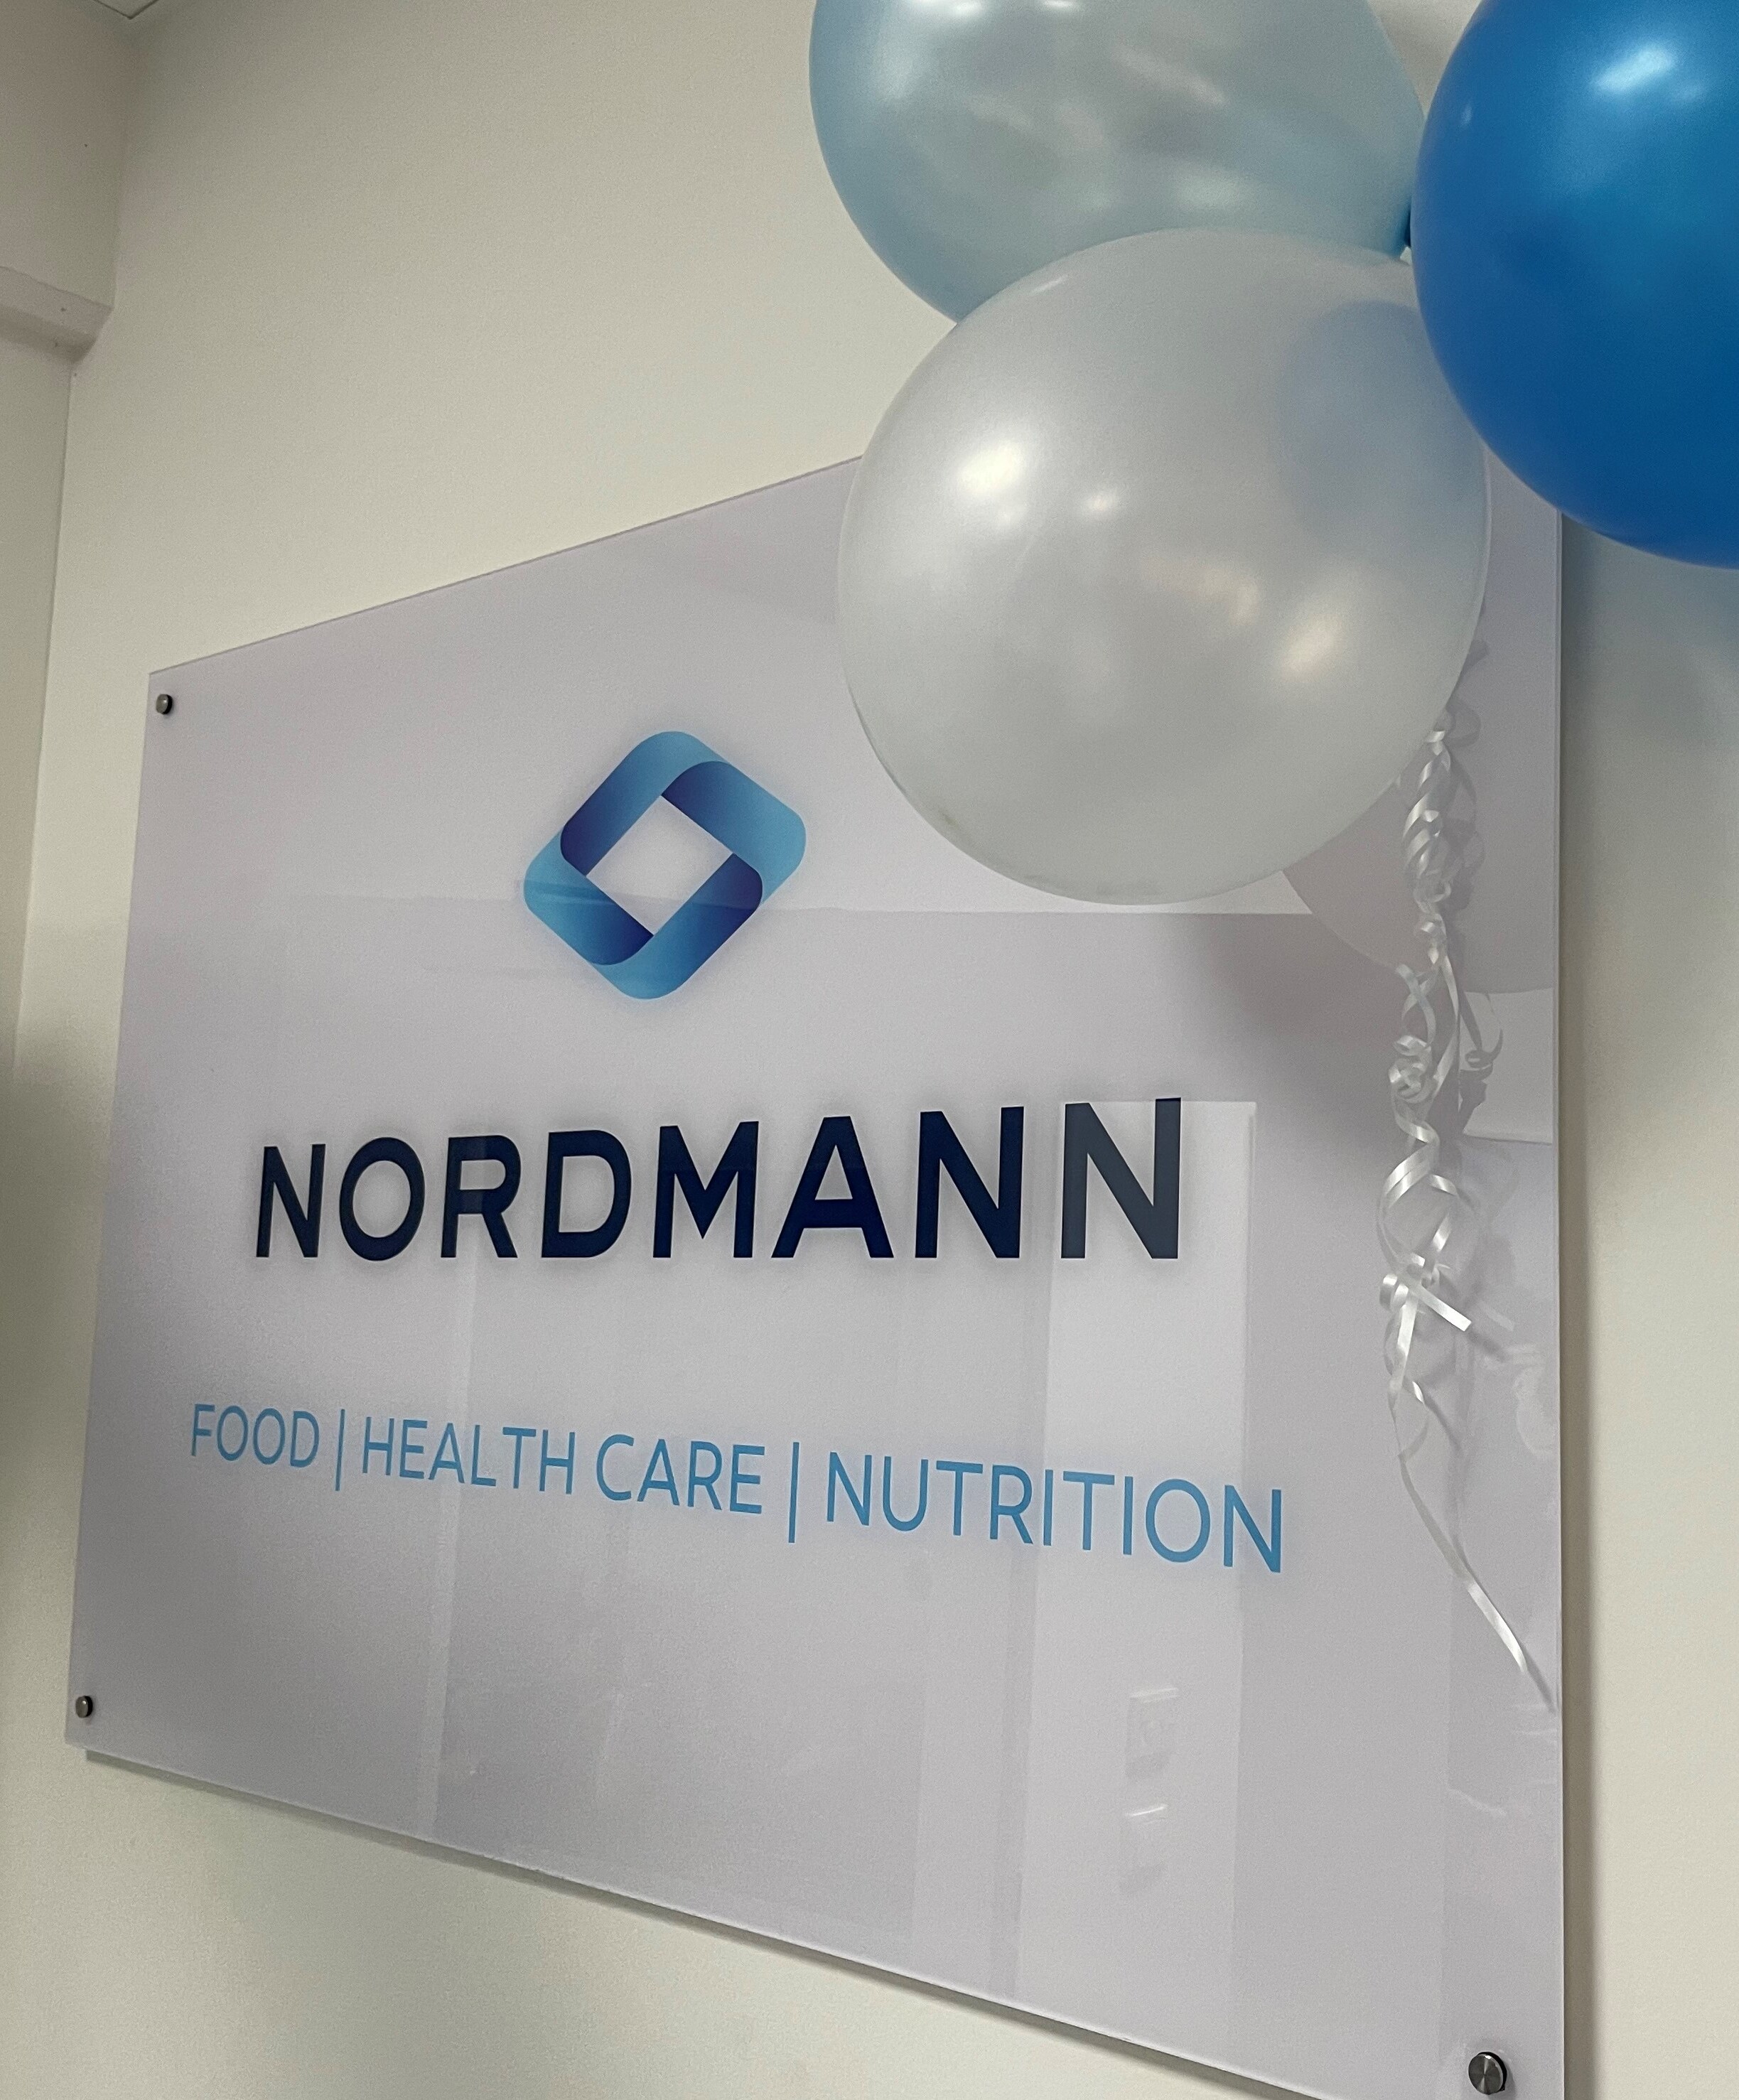 Nordmann Living Lab for Food | Health Care | Nutrition